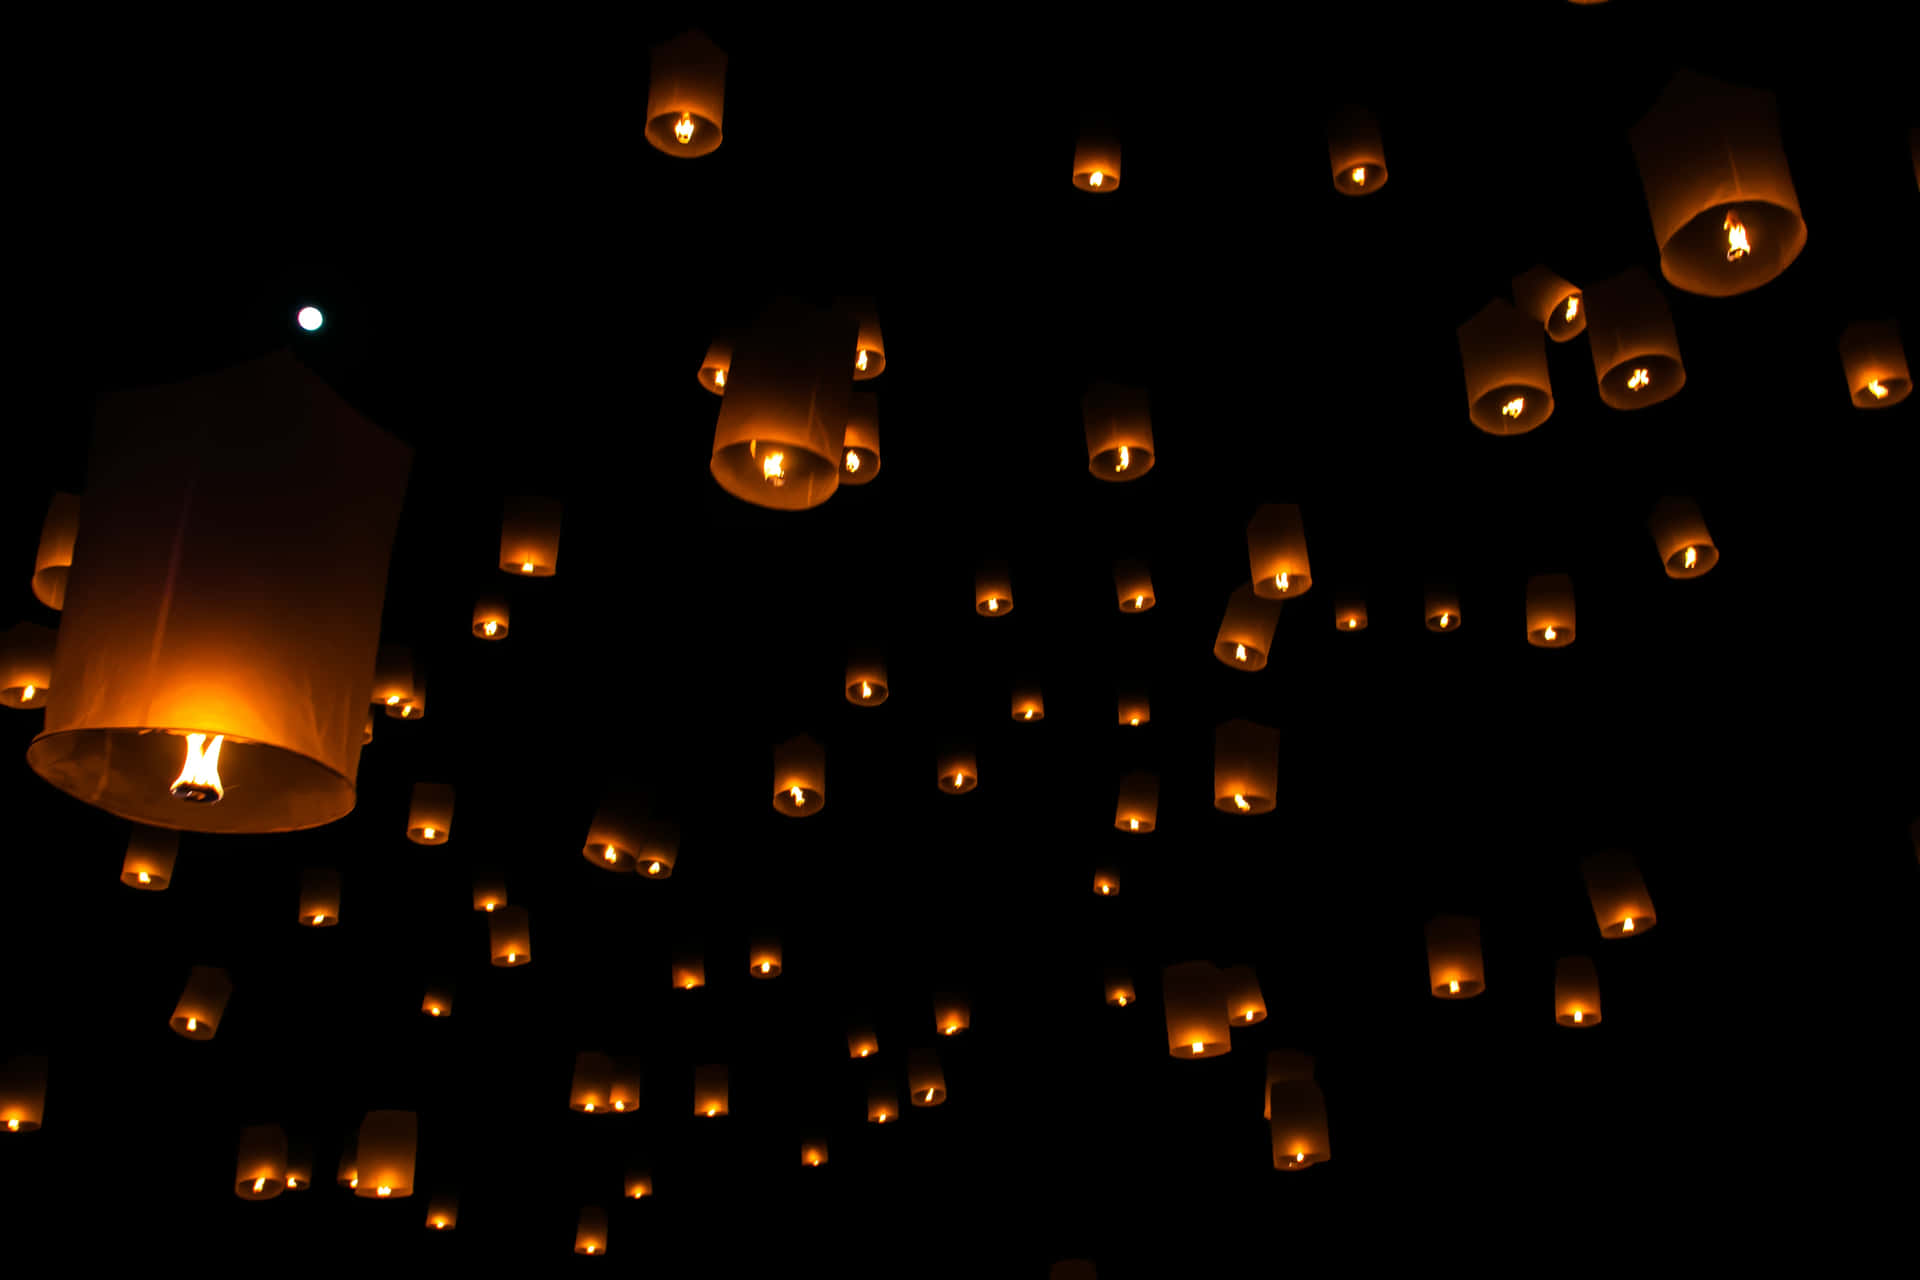 Illuminated Lantern Swinging in the Night